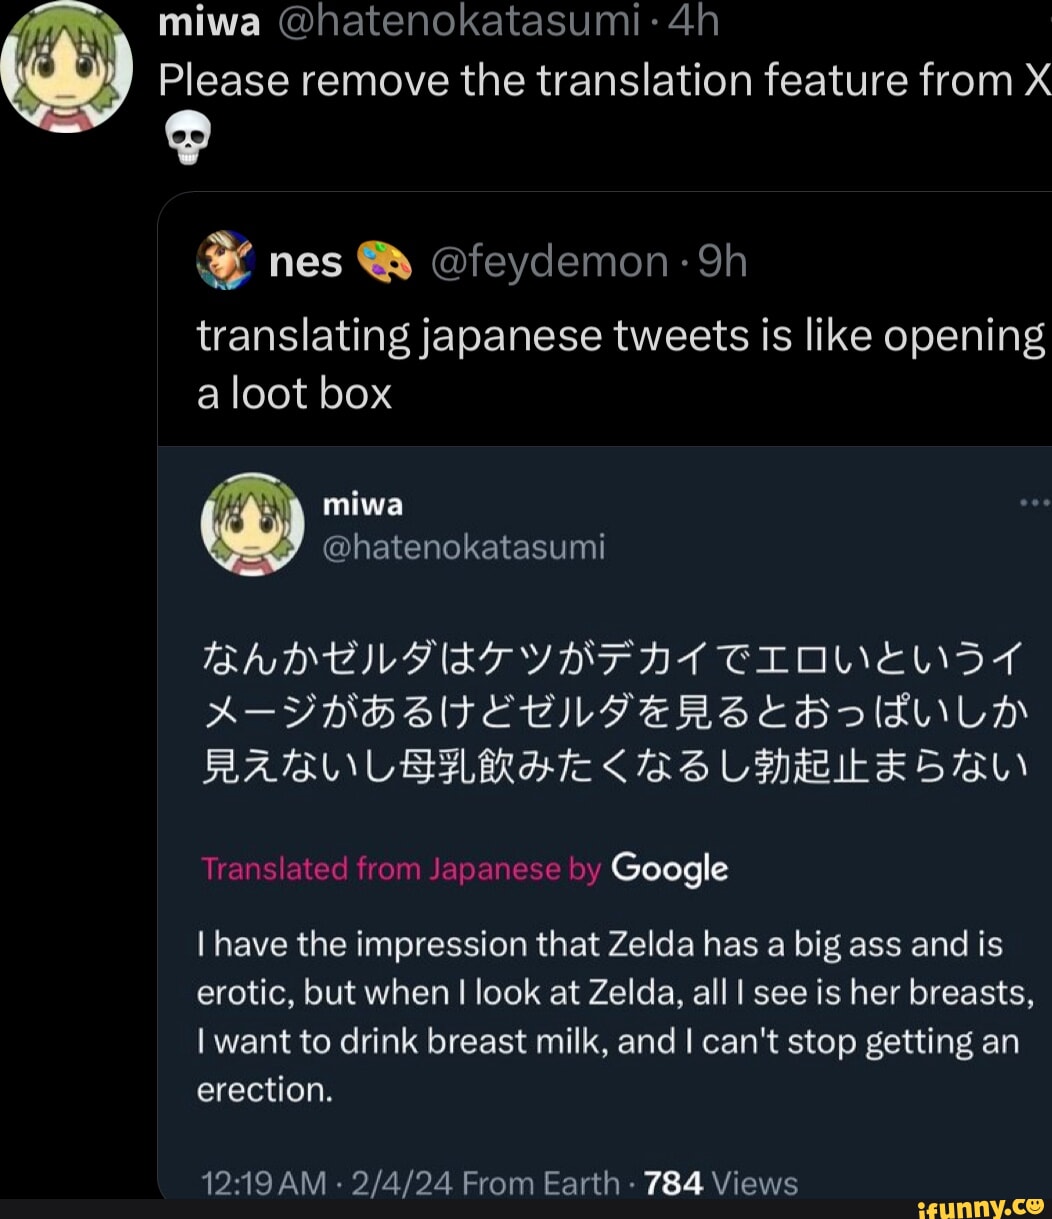 Miwa @hatenokatasumi: Please remove the translation feature from X mes  @feydemon- translating japanese tweets is like